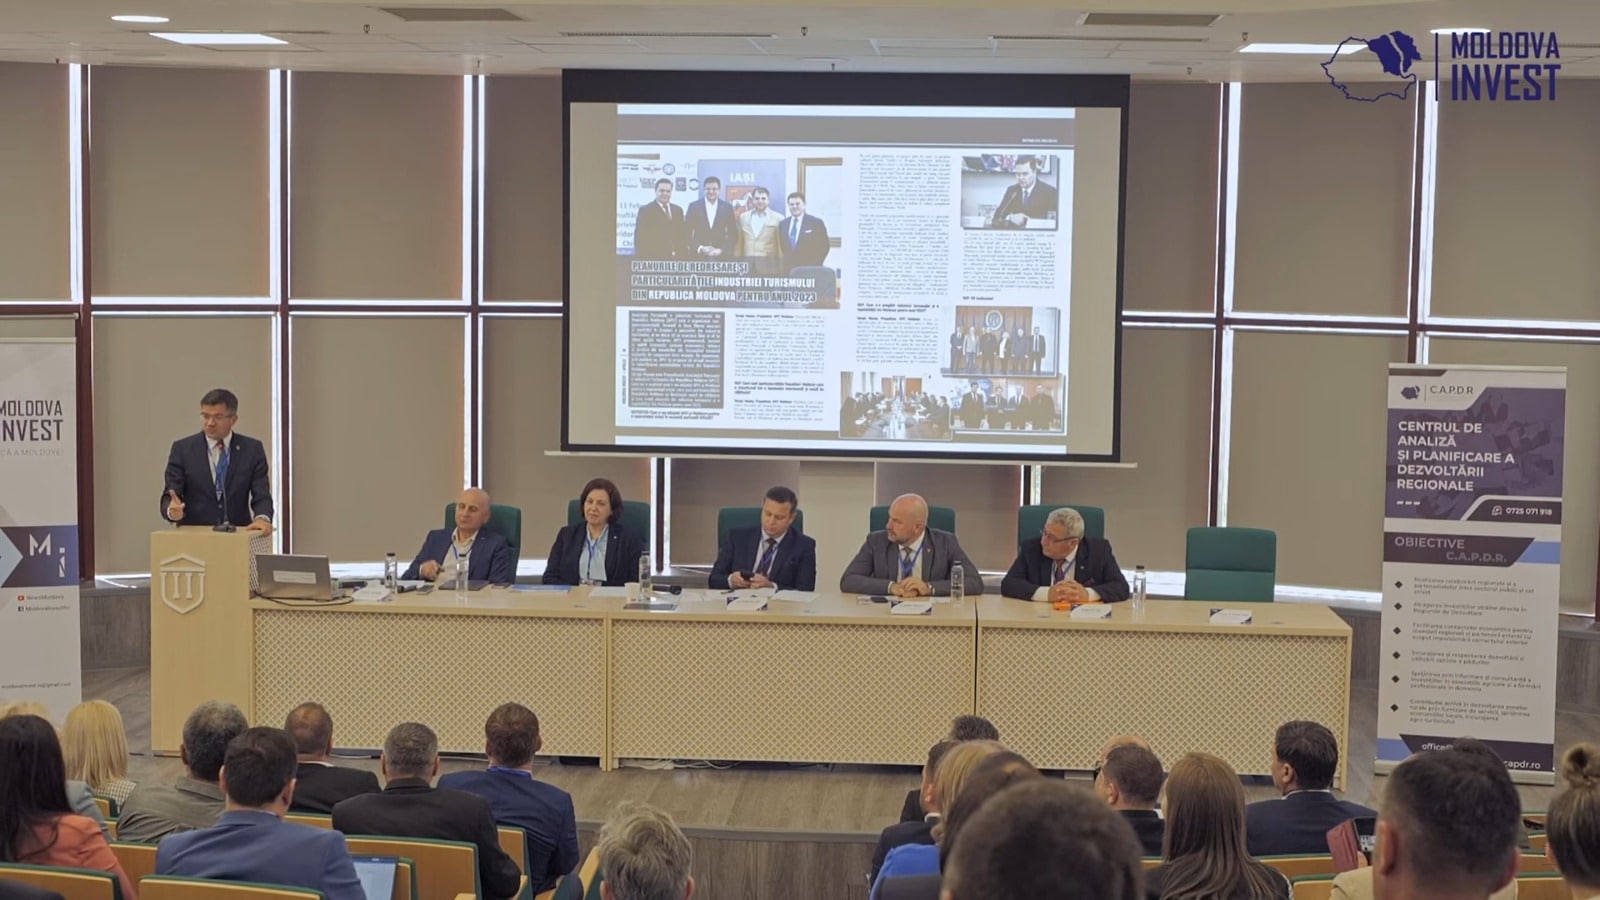 costel alexe forumul economic moldova - Moldova Invest